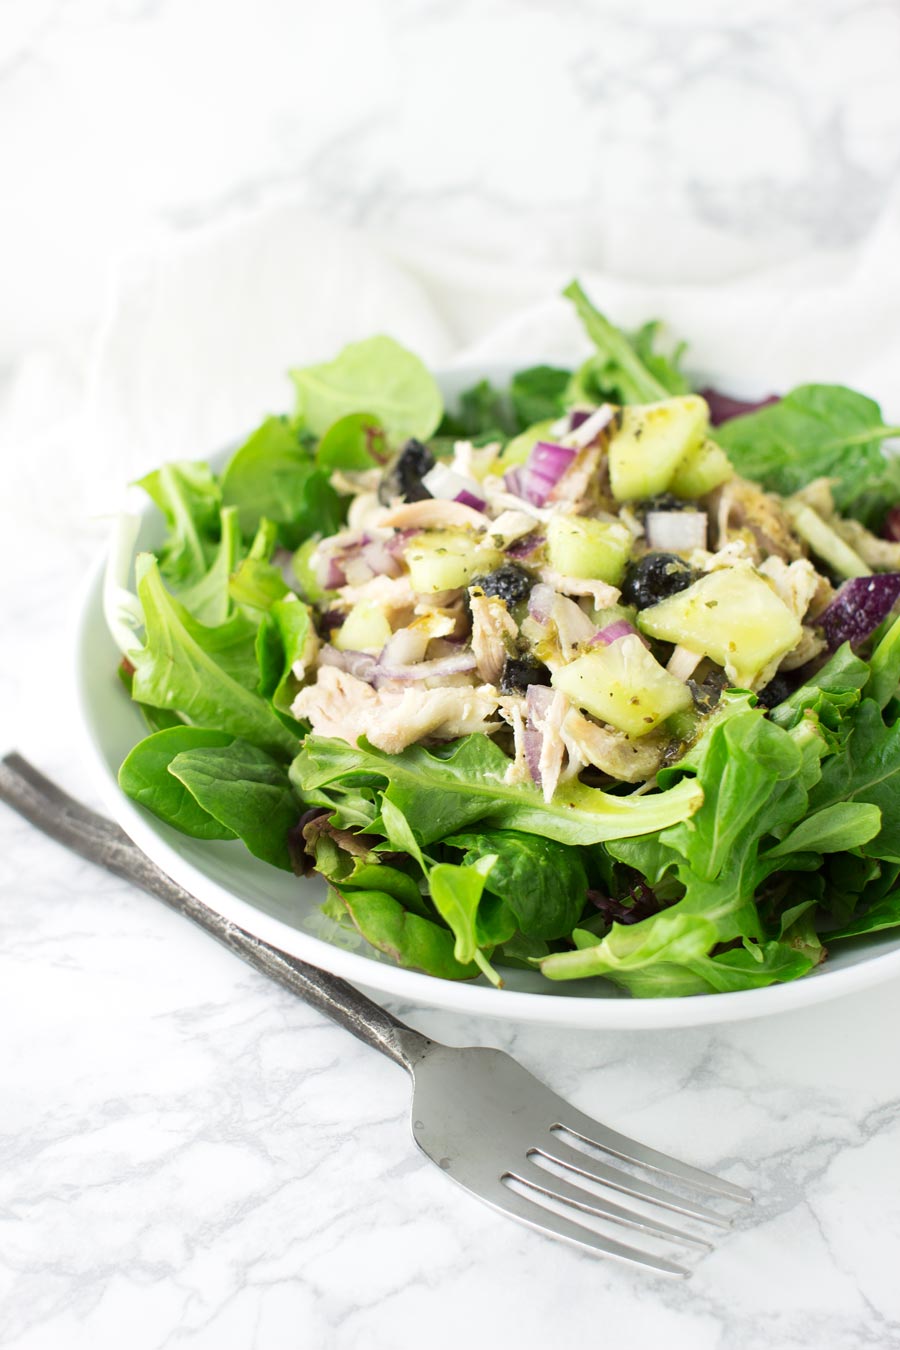 Greek Salad recipe from acleanplate.com #paleo #aip #glutenfree